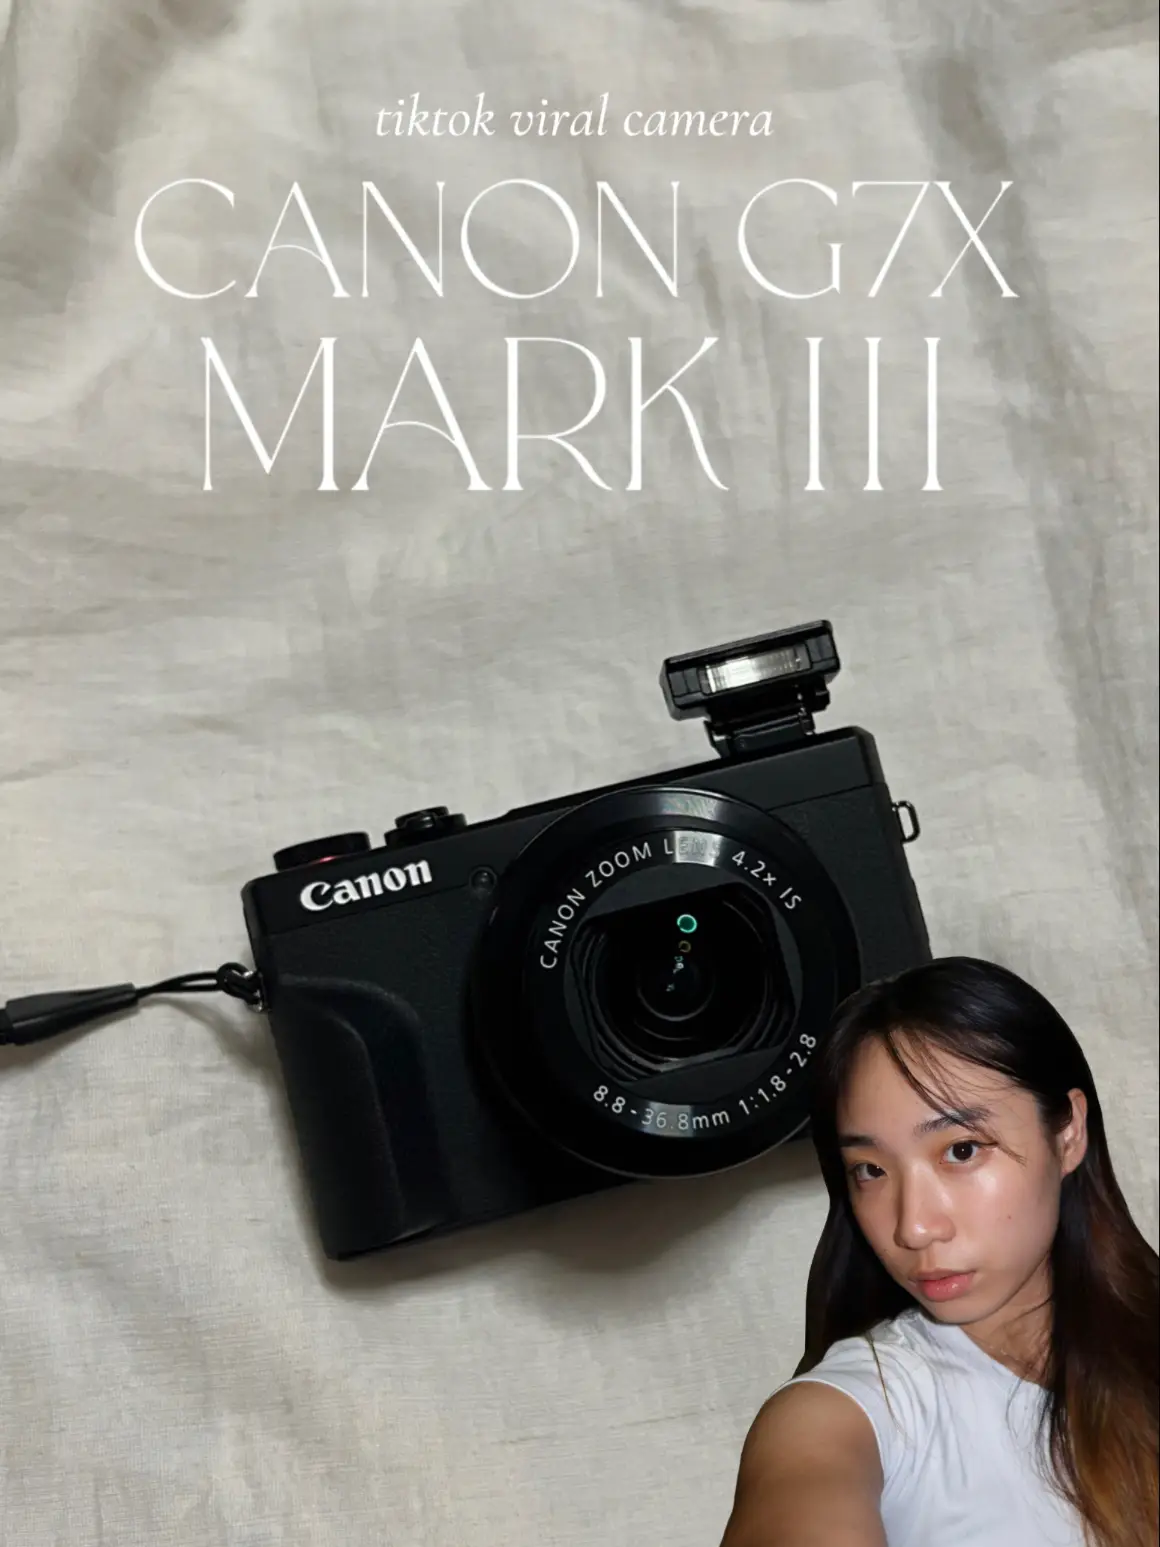 Canon g7x camera settings - Lemon8 Search